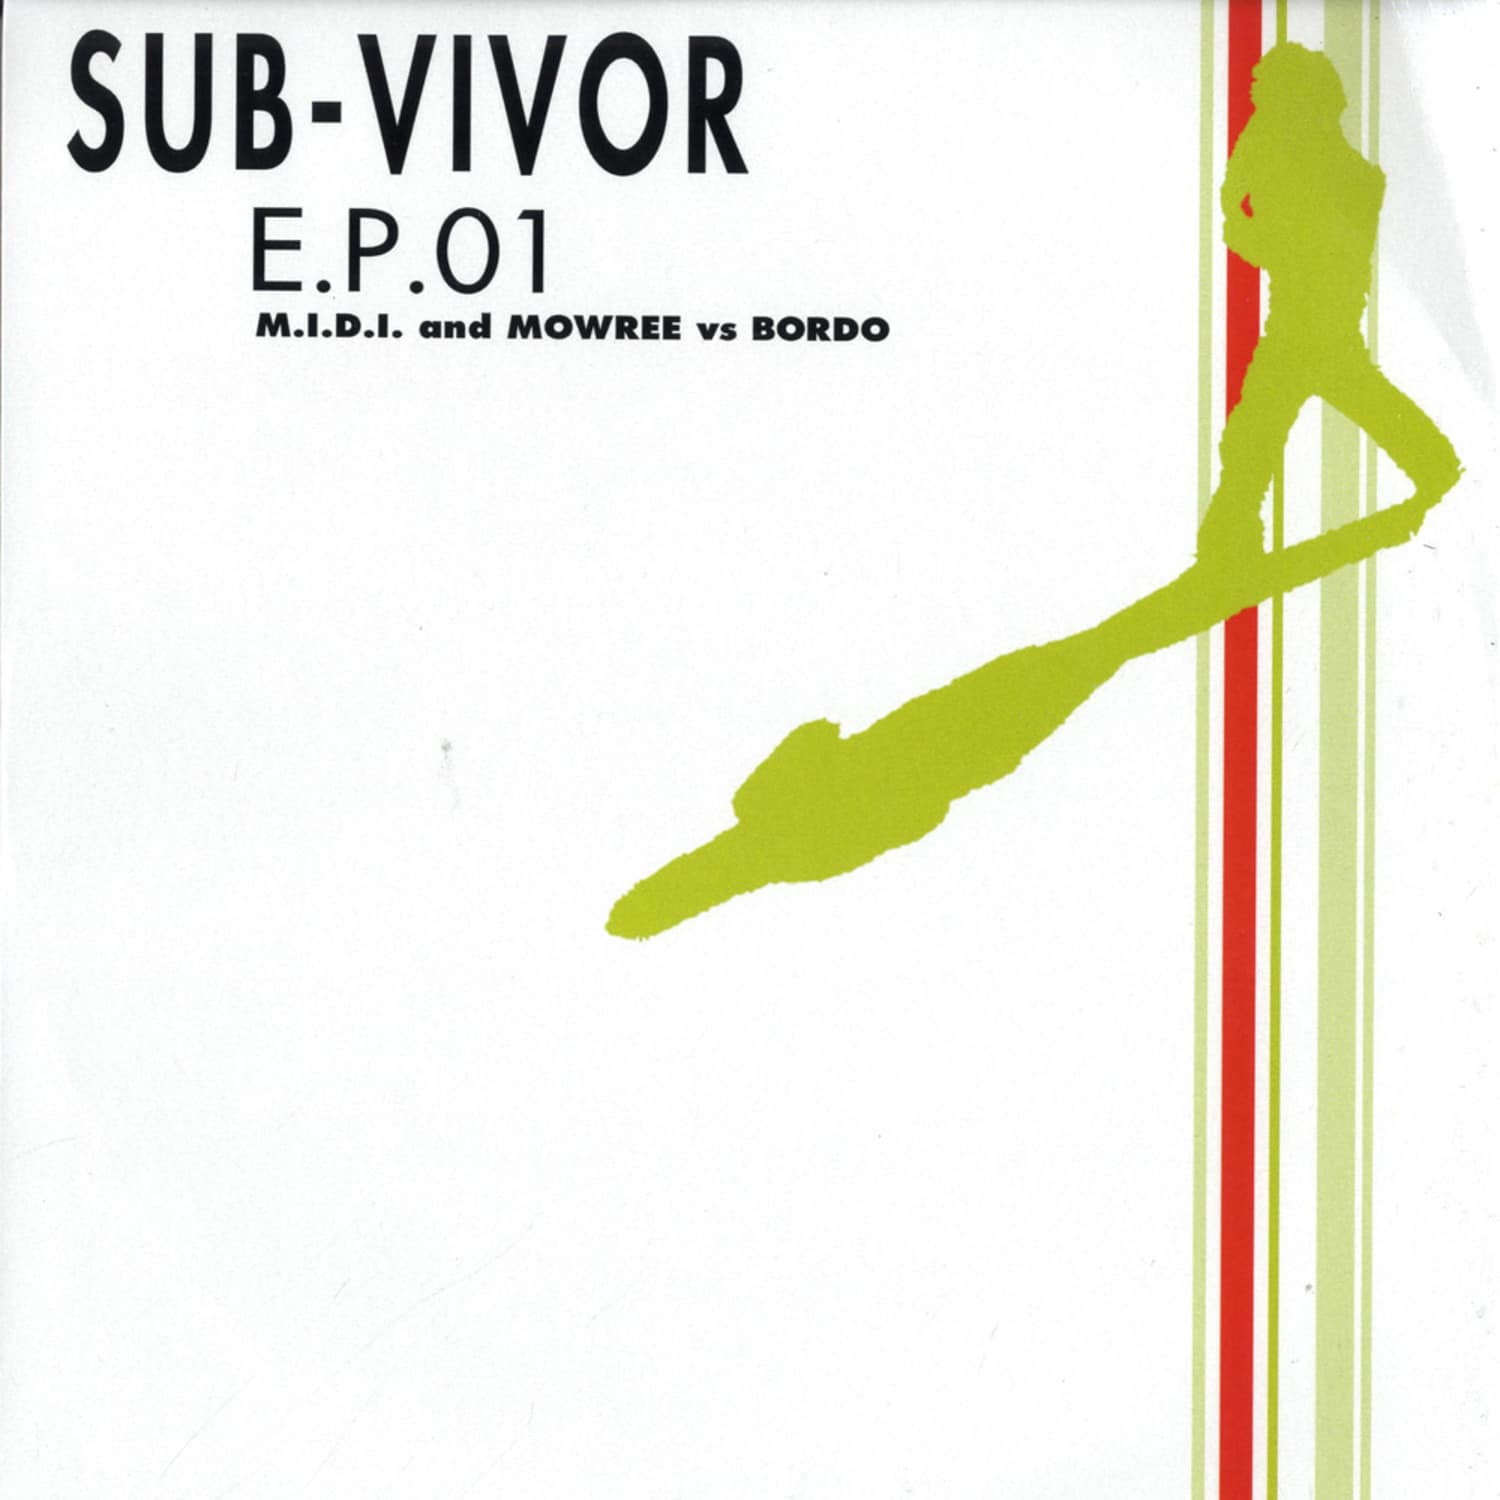 Midi And Mowree vs. Bordo - SUB - VIVOR EP 01